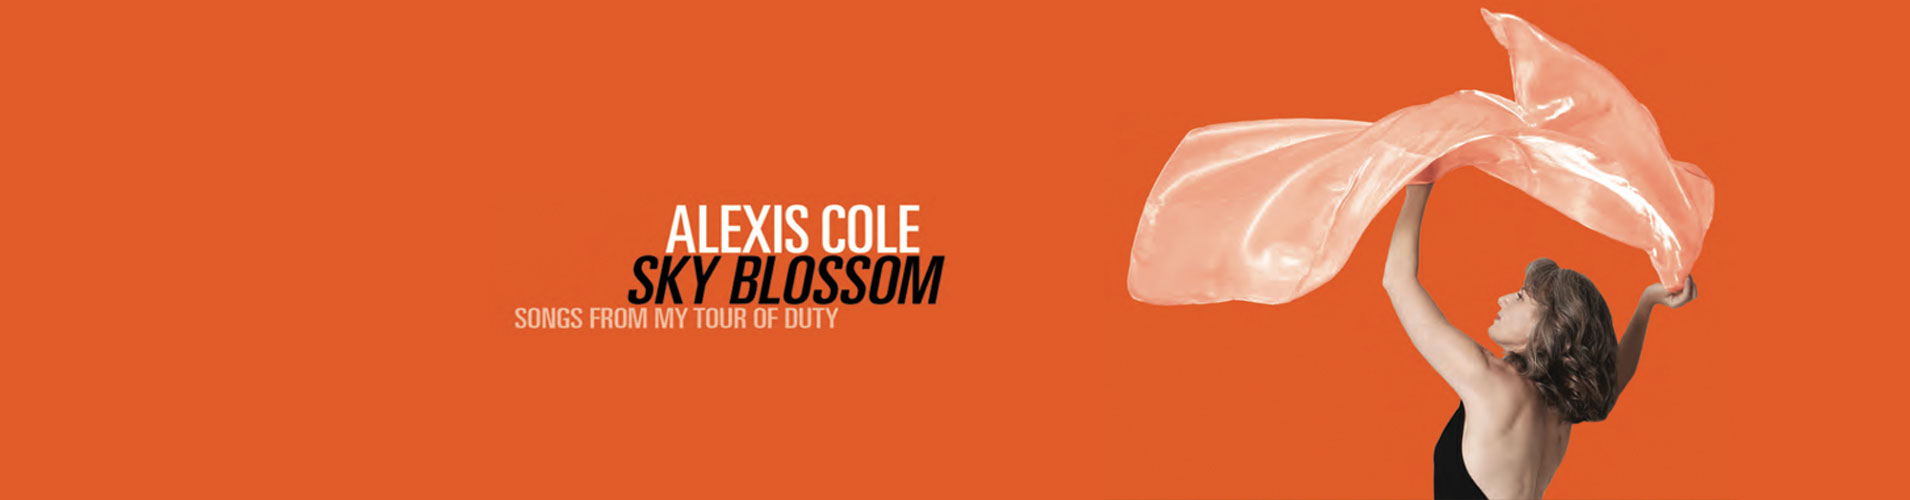 Alexis-Cole-1090x500-01-Ban.jpg